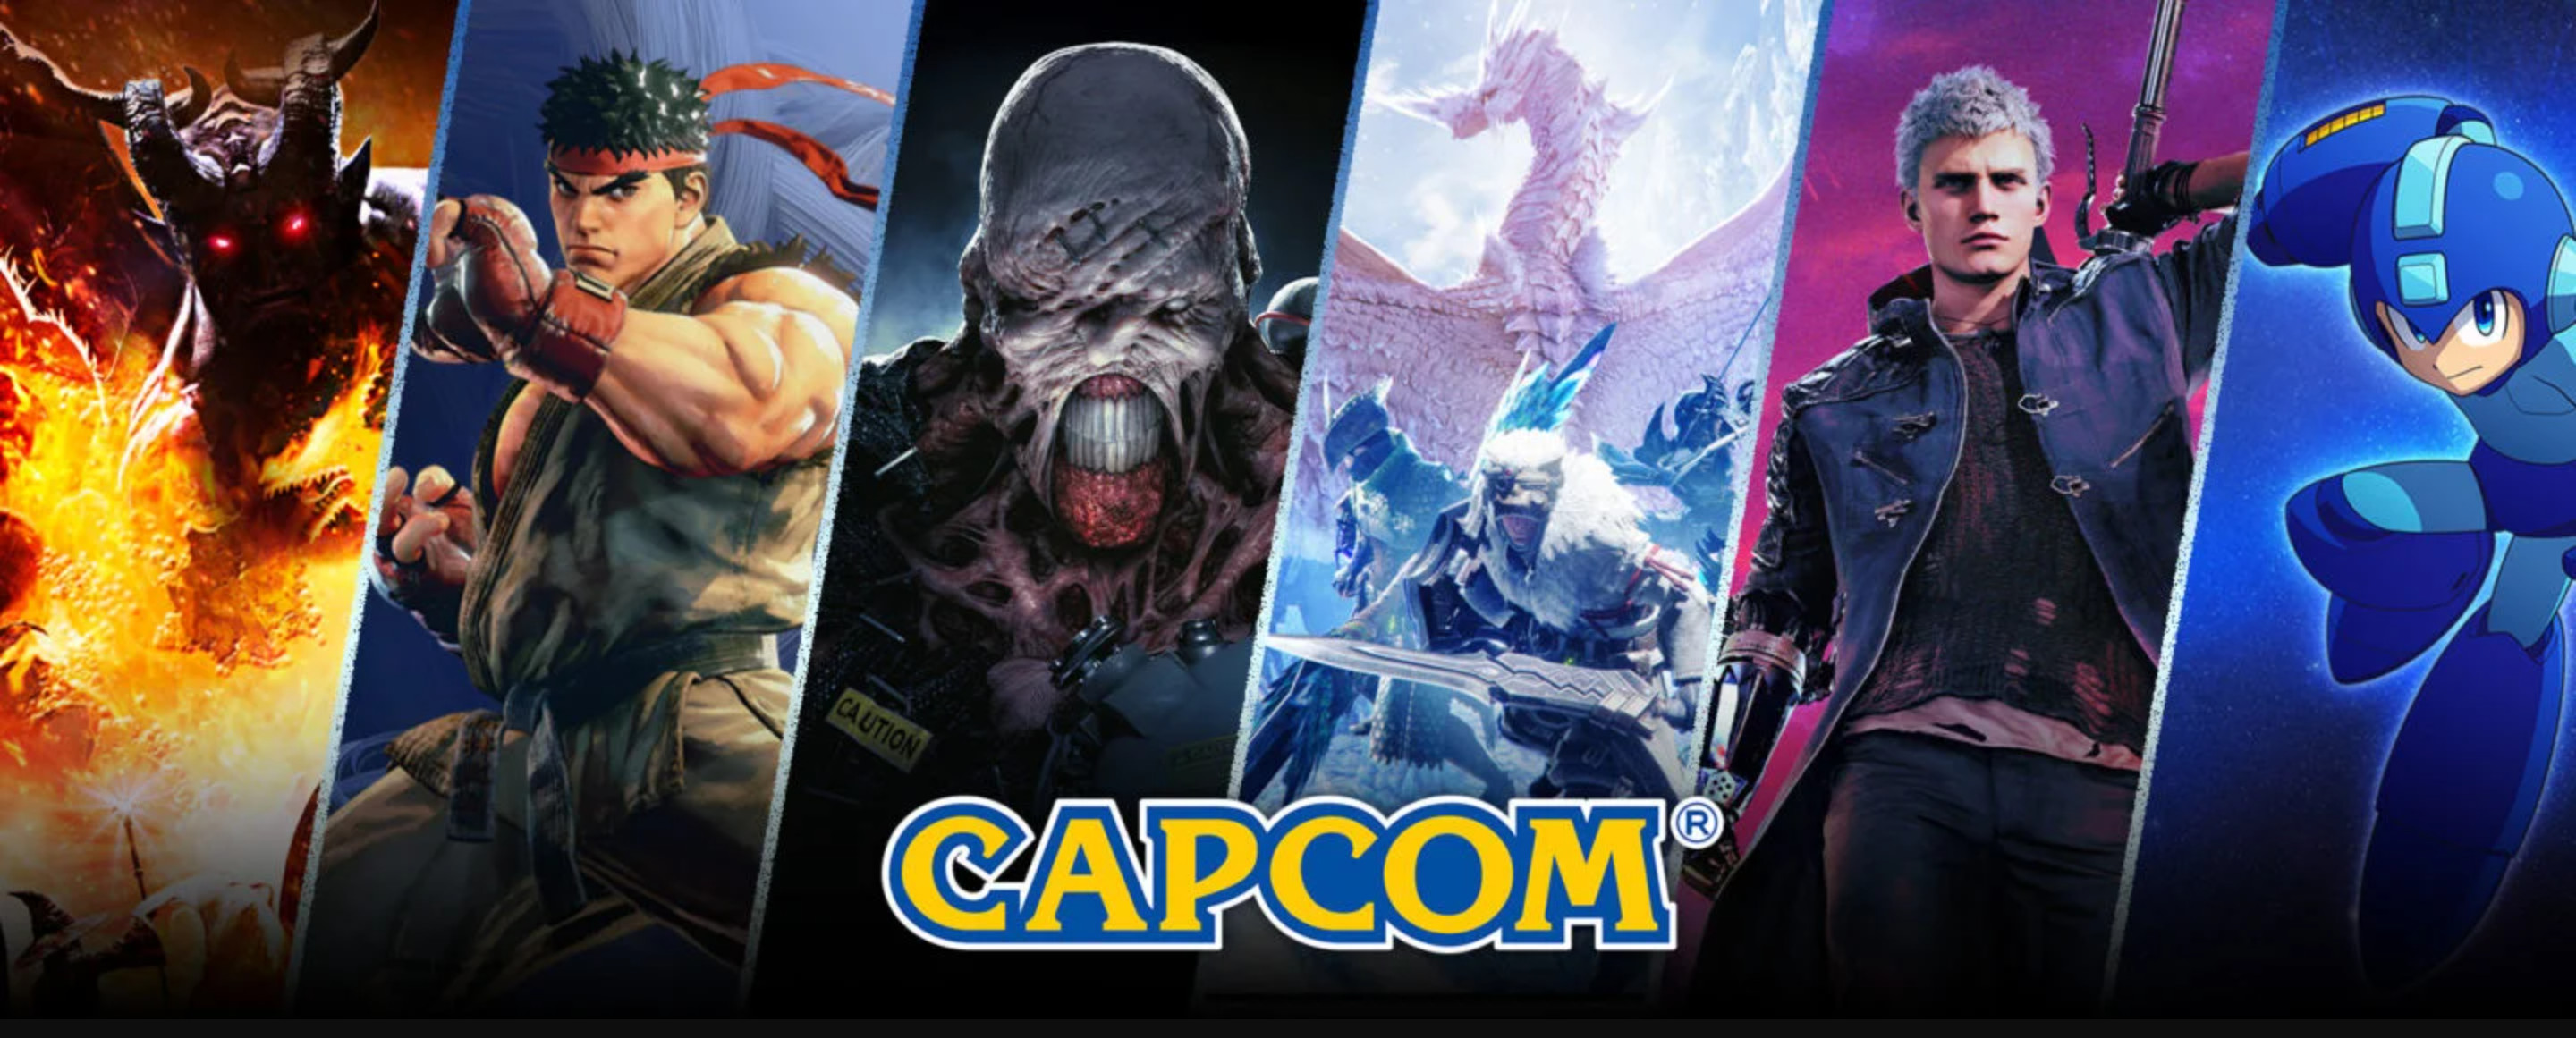 Capcom：正朝着连续第11年增长的目标稳步前进